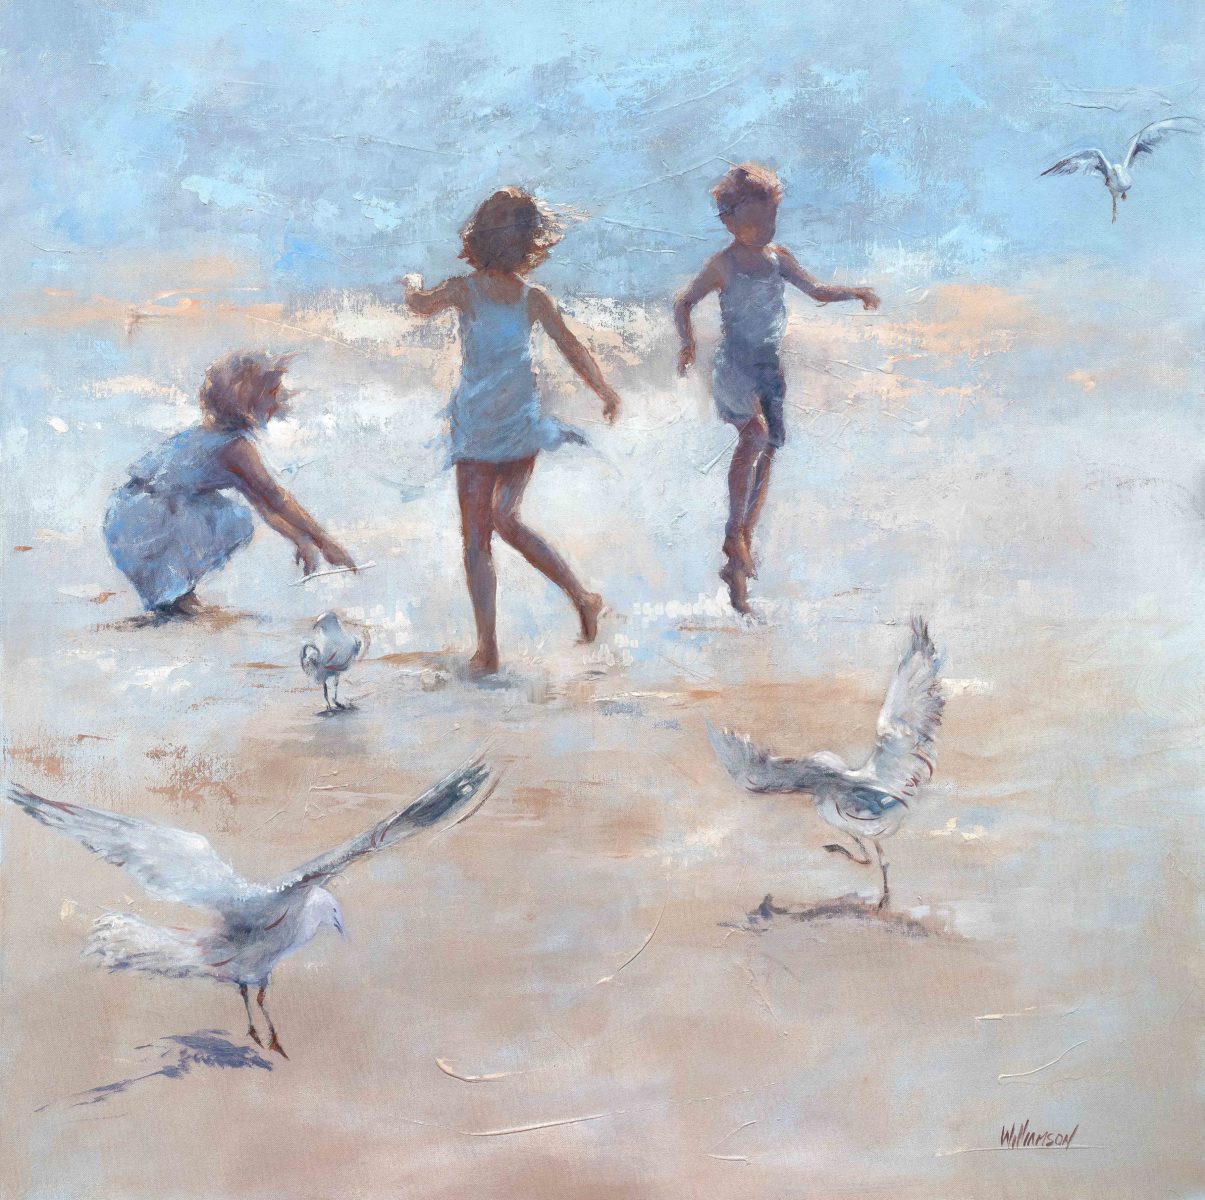 Beach Frolic | Jan Williamson | Oil on canvas | 102 x 102 cm | $9,800